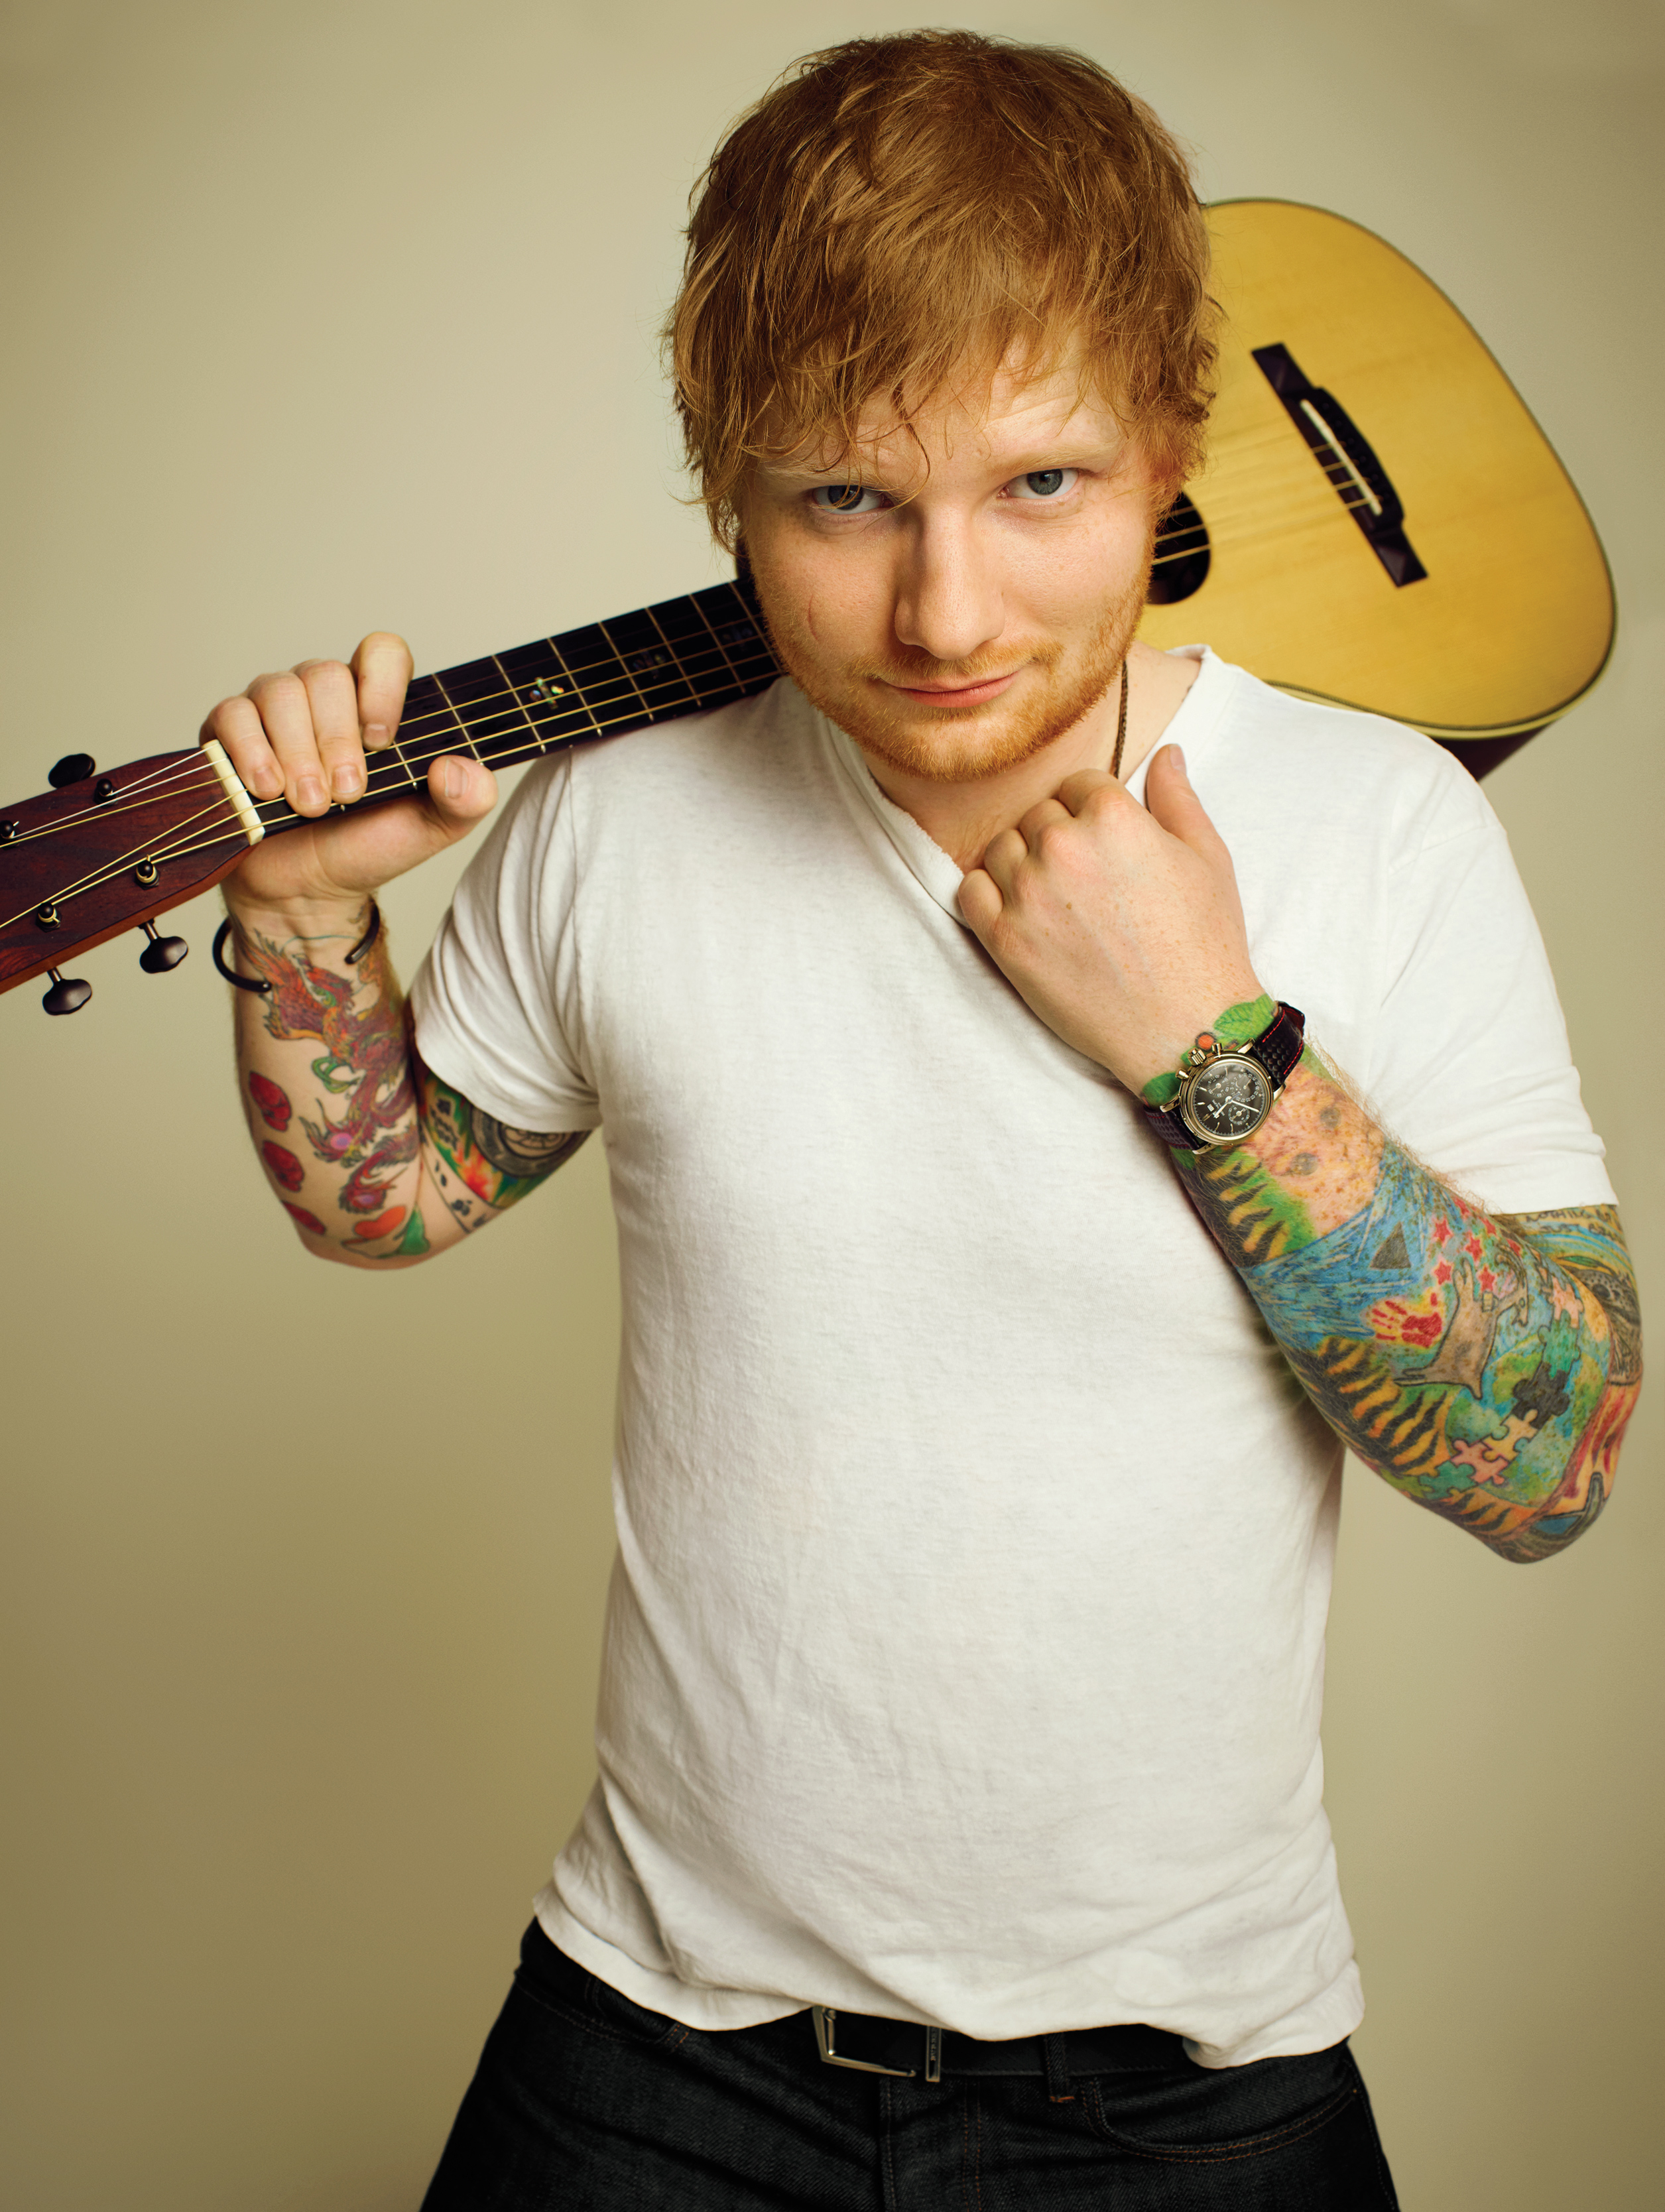 Ed Sheeran Insomniacs Lullaby chords